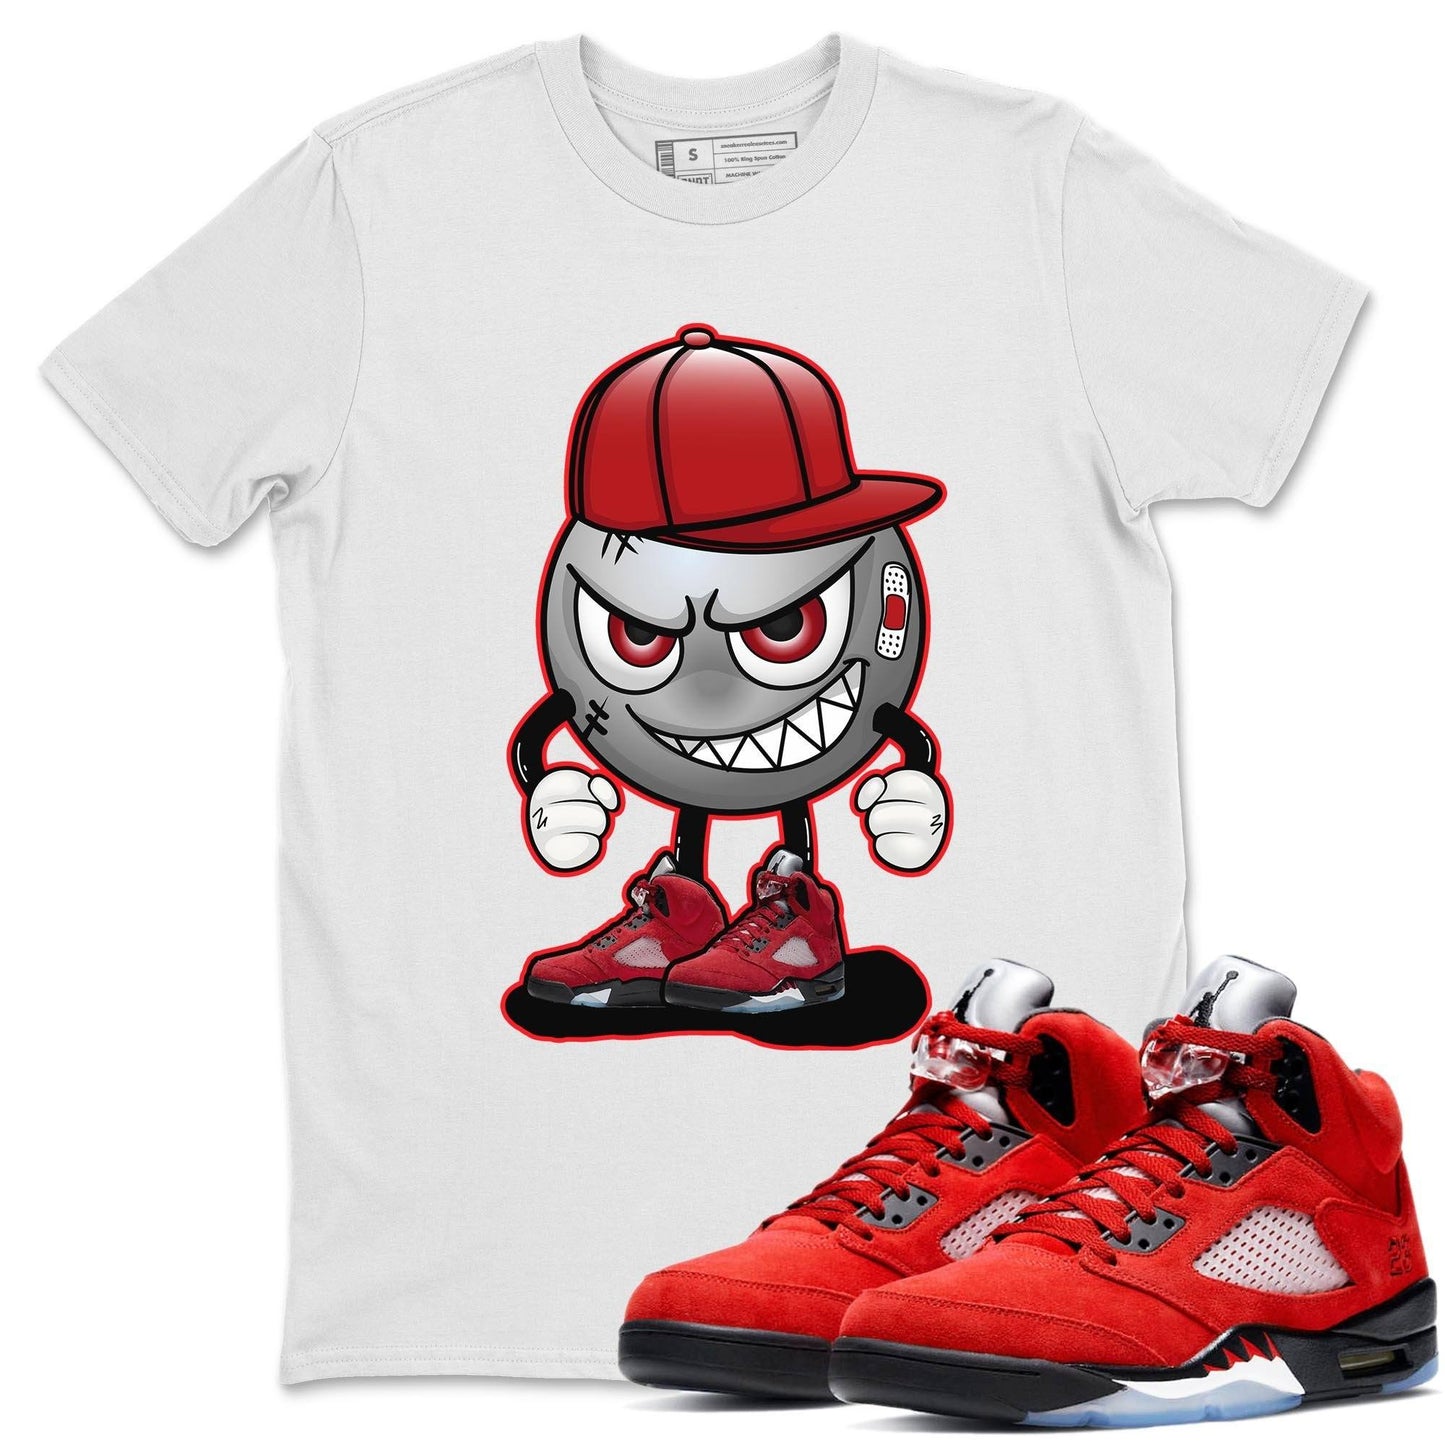 Jordan 5 Raging Bull Shirt To Match Jordans Mischief Emoji Sneaker Tees Jordan 5 Raging Bull Drip Gear Zone Sneaker Matching Clothing Unisex Shirts